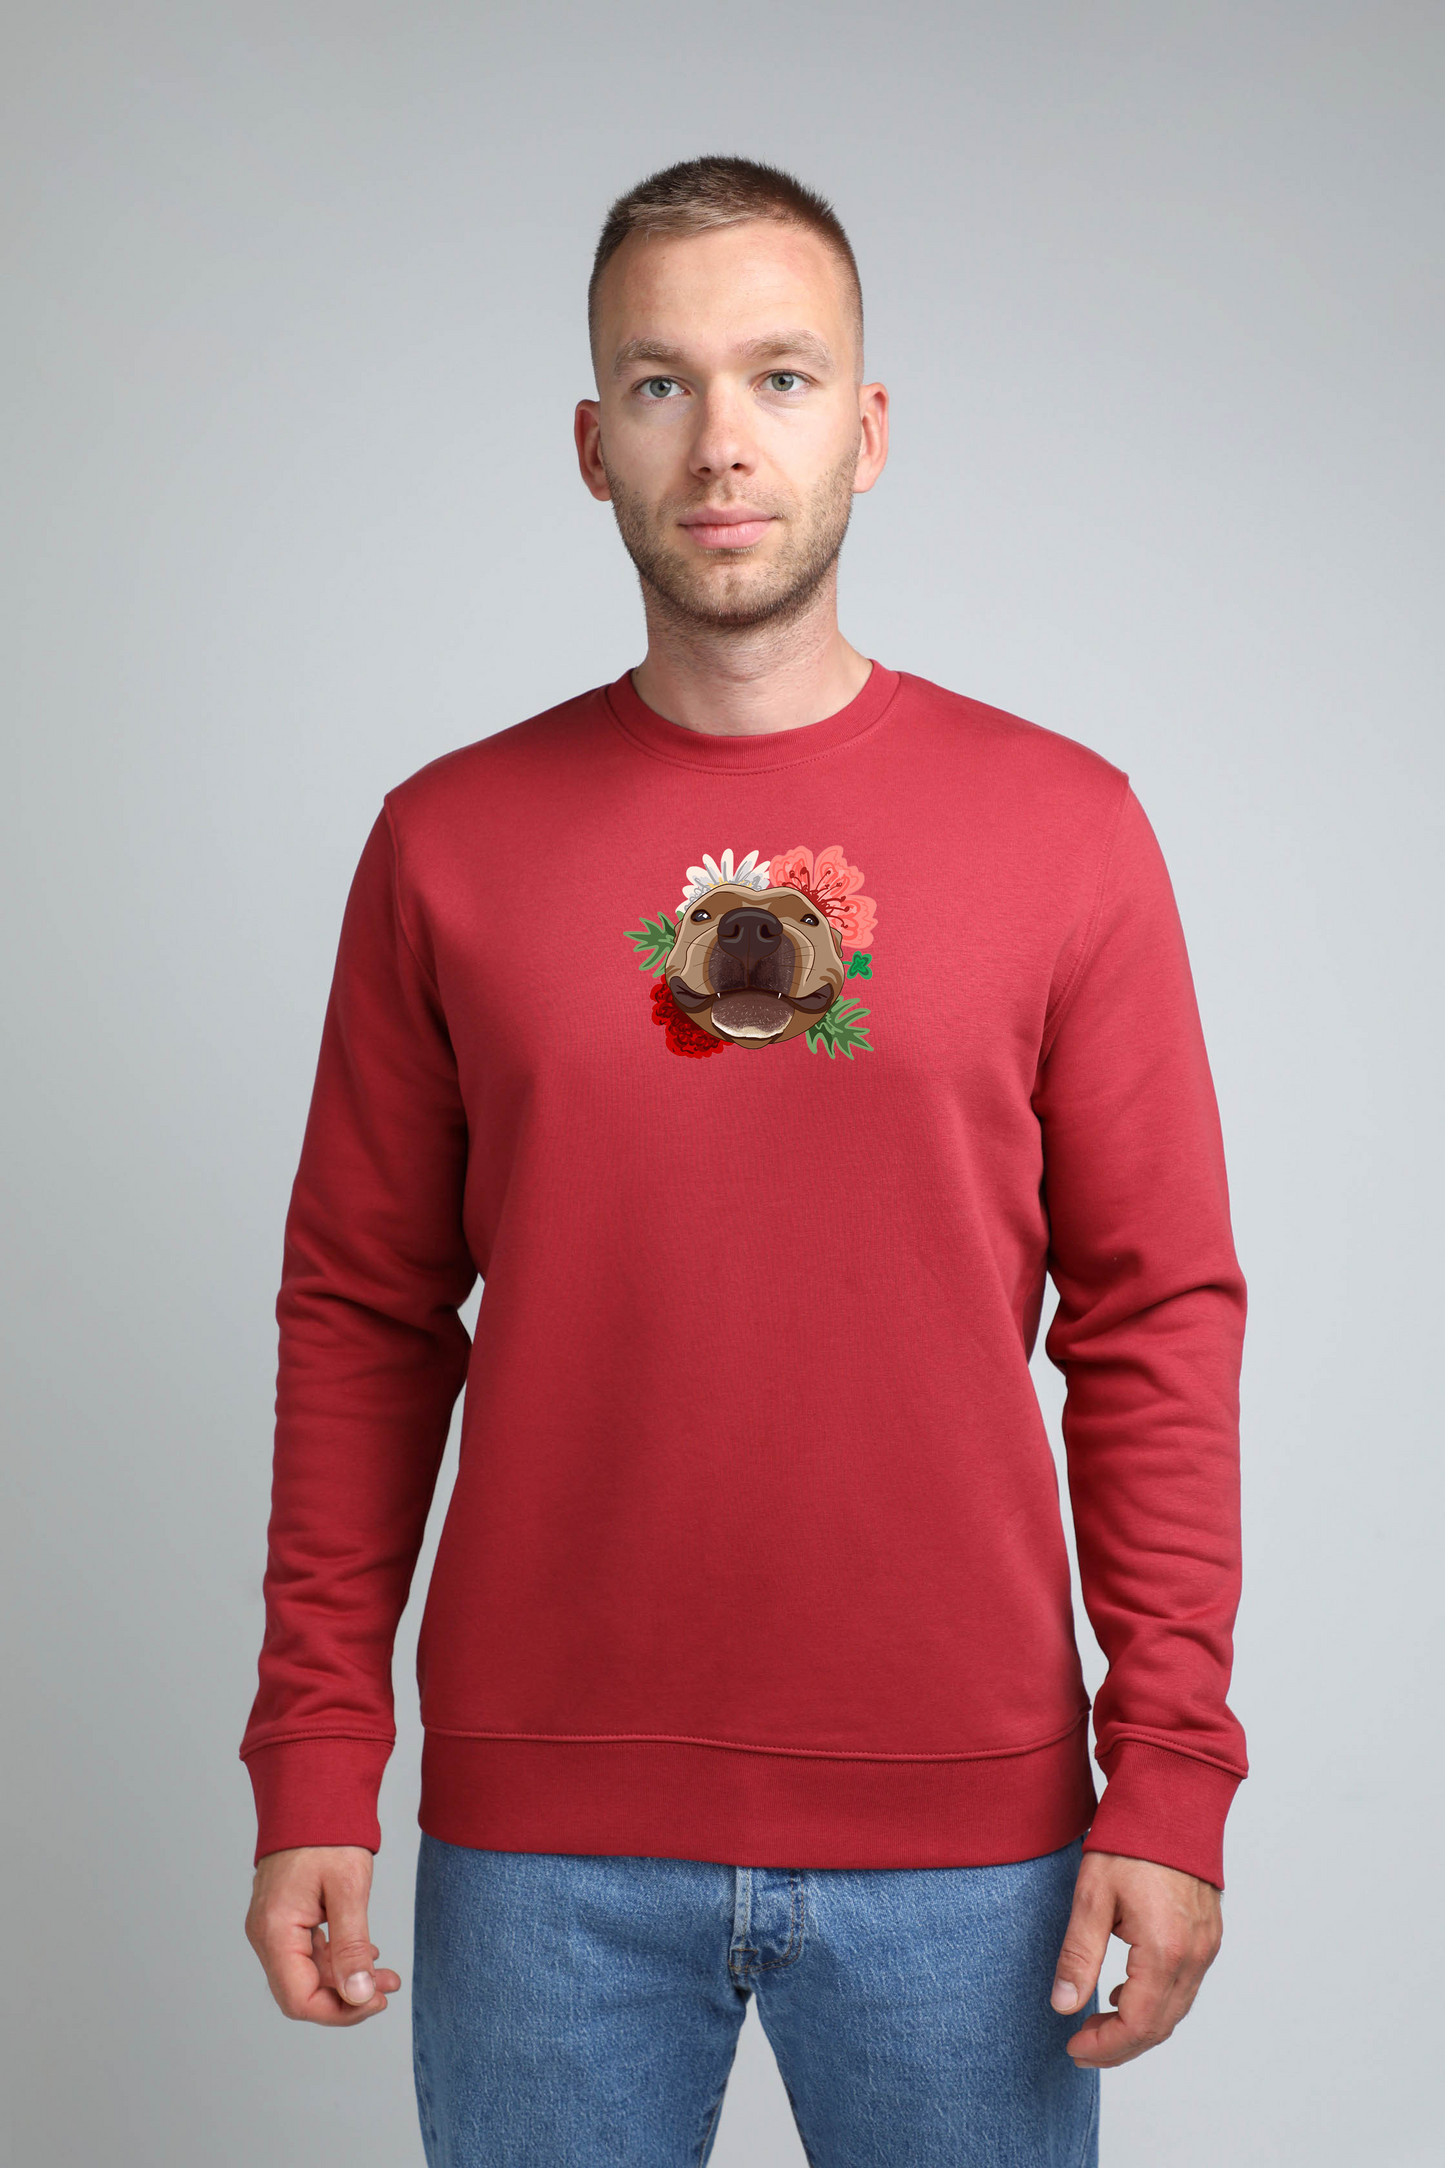 Serious dog with flowers | Crew neck sweatshirt with dog. Regular fit | Unisex - premium dog goods handmade in Europe by animalistus